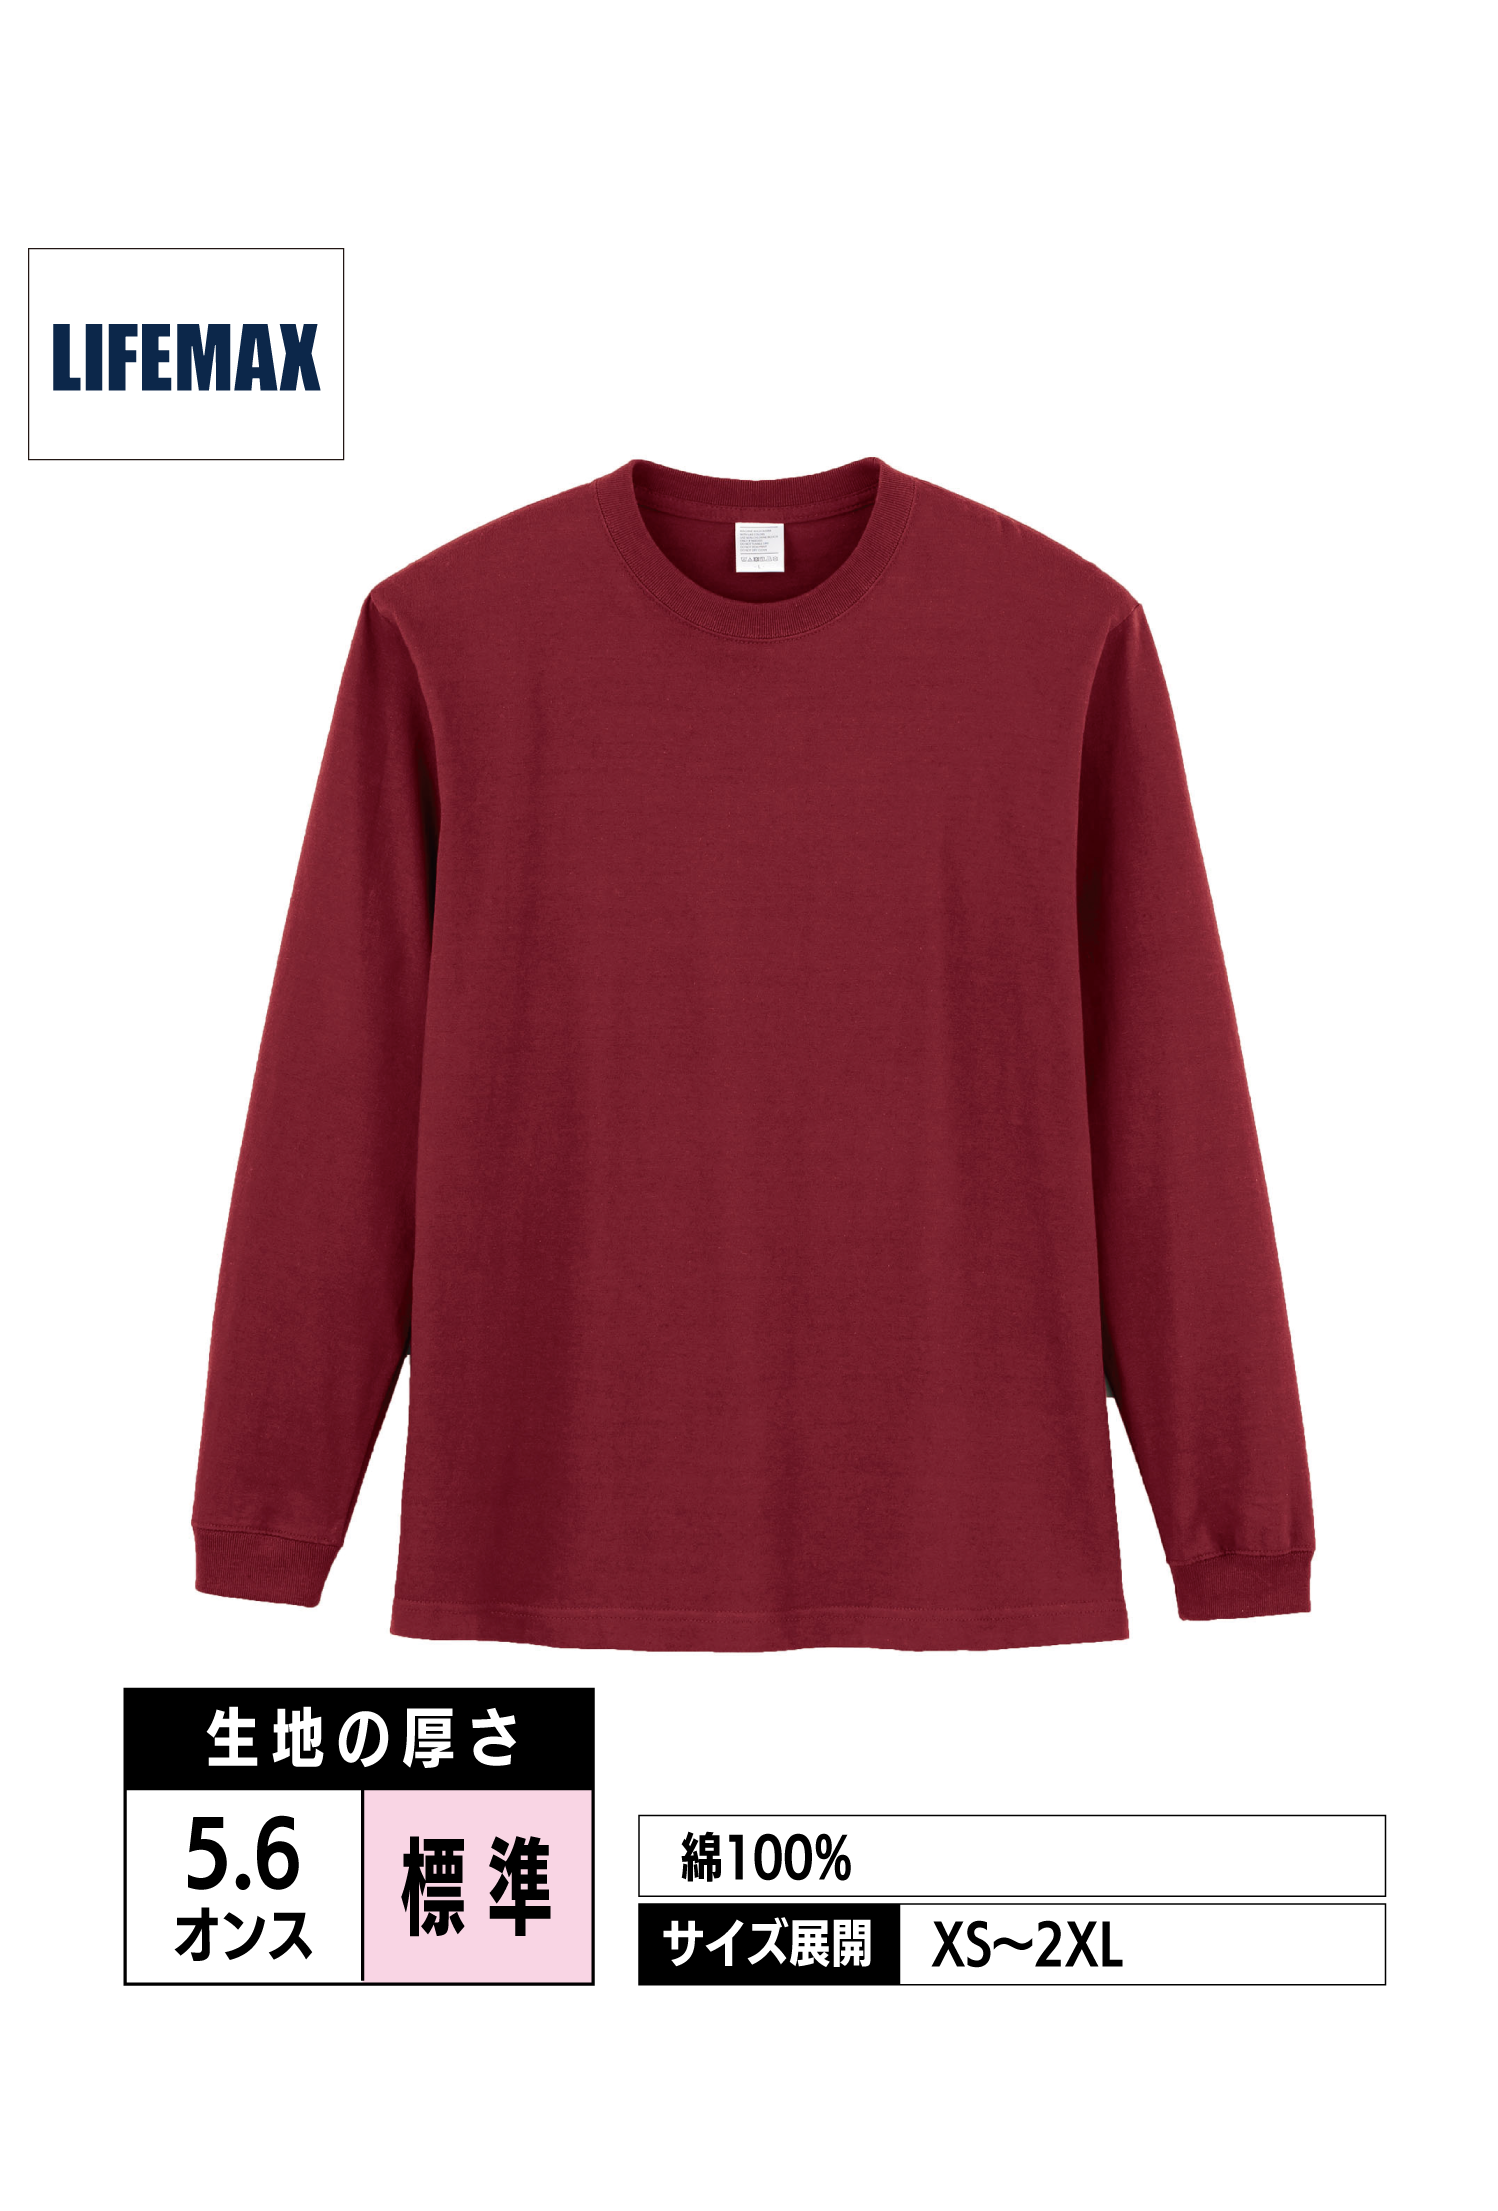 MS1612｜5.6オンスハイグレードロングスリーブTシャツ【全6色】LIFEMAX